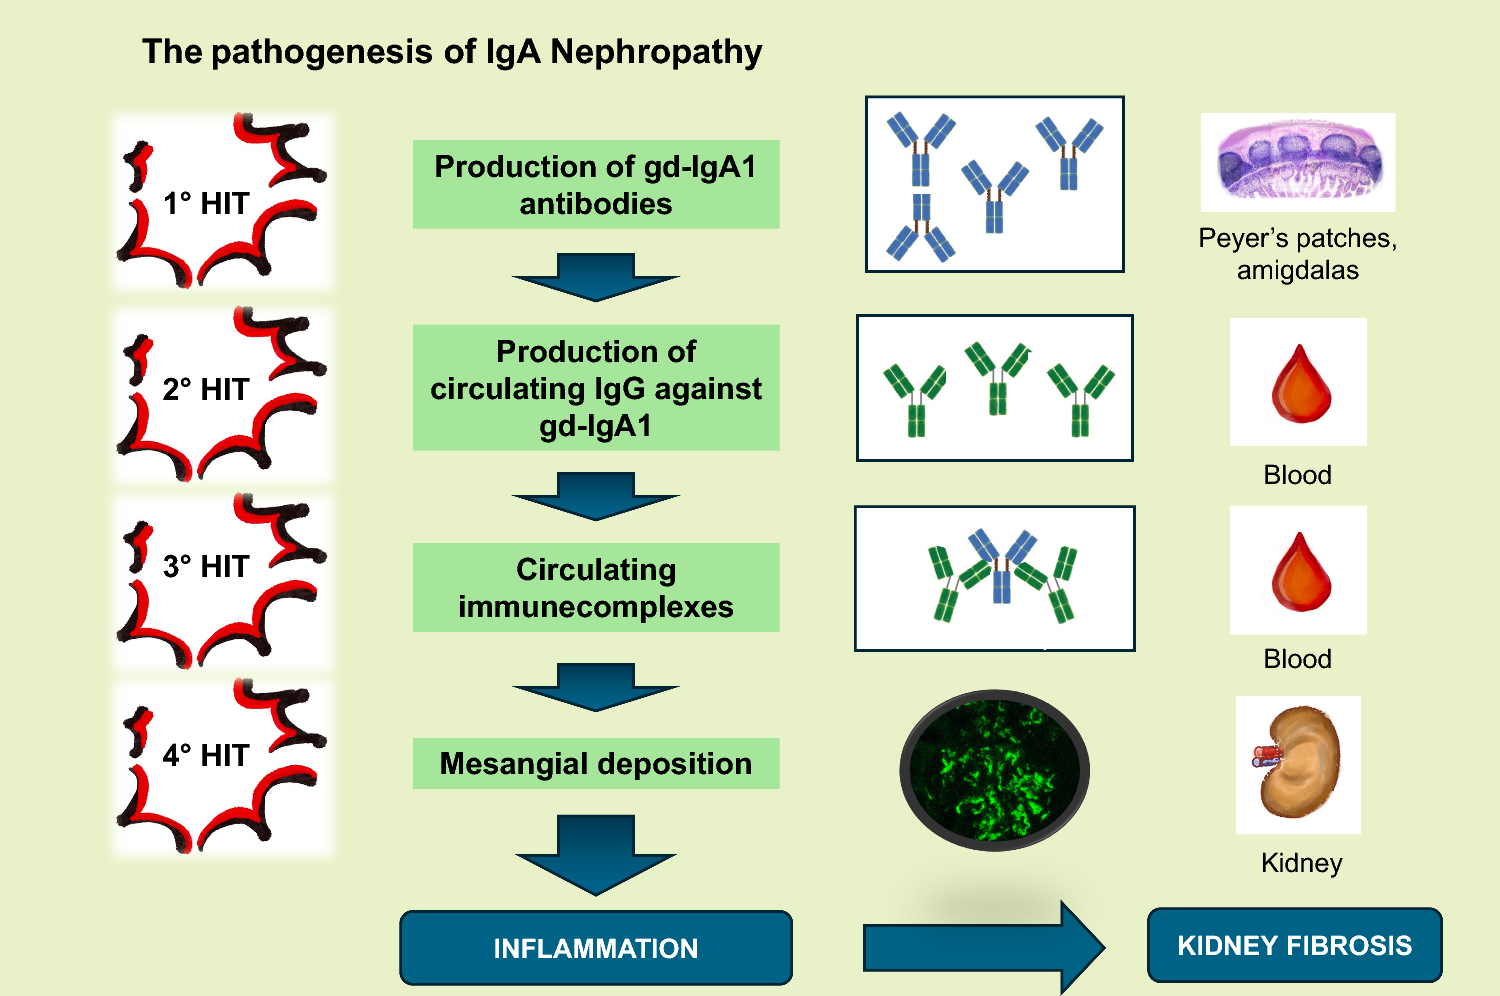 Drugs in Development to Treat IgA Nephropathy